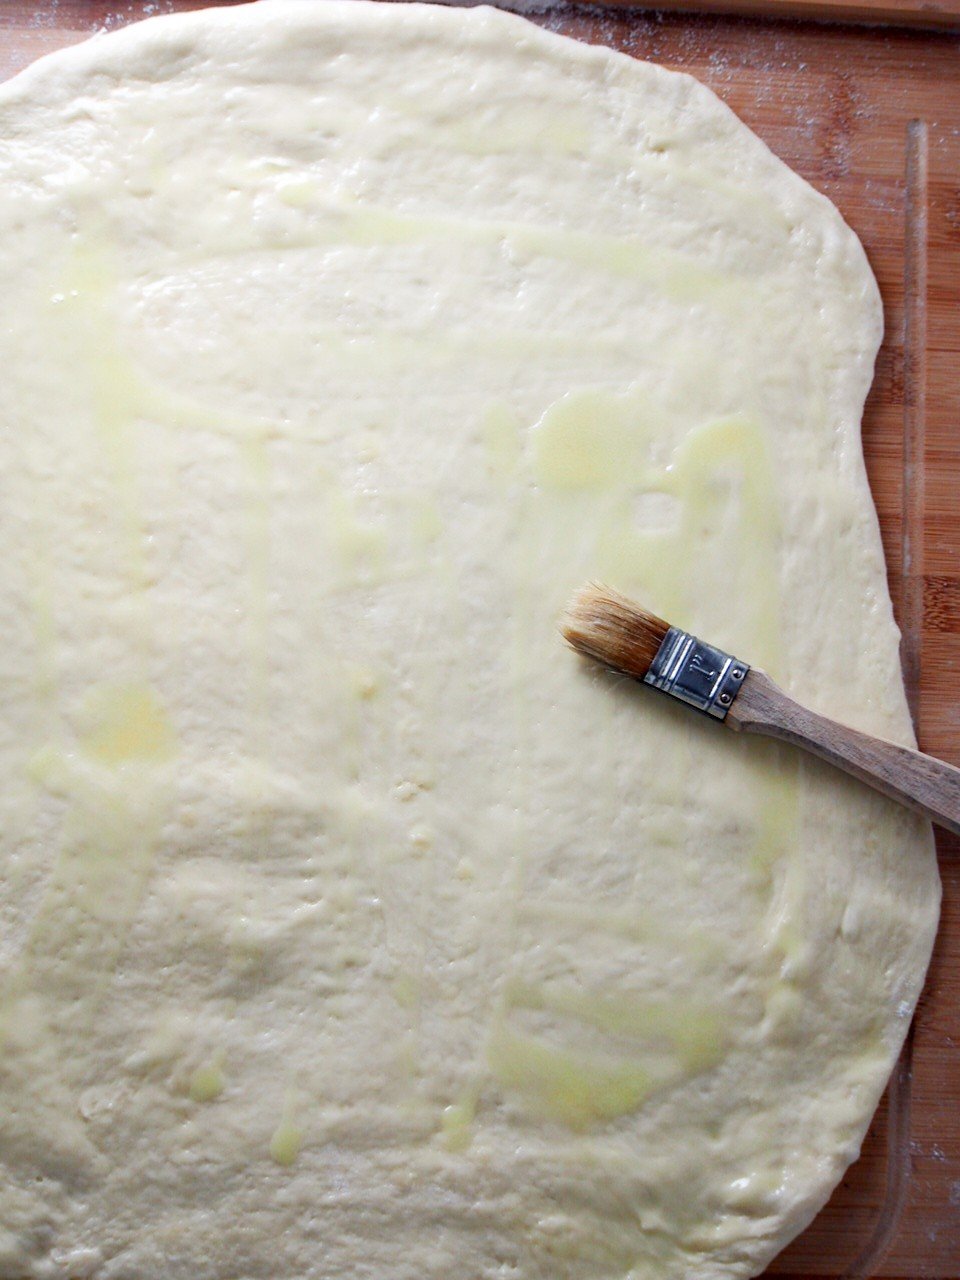 The mallorca dough rolled into a rectangle.